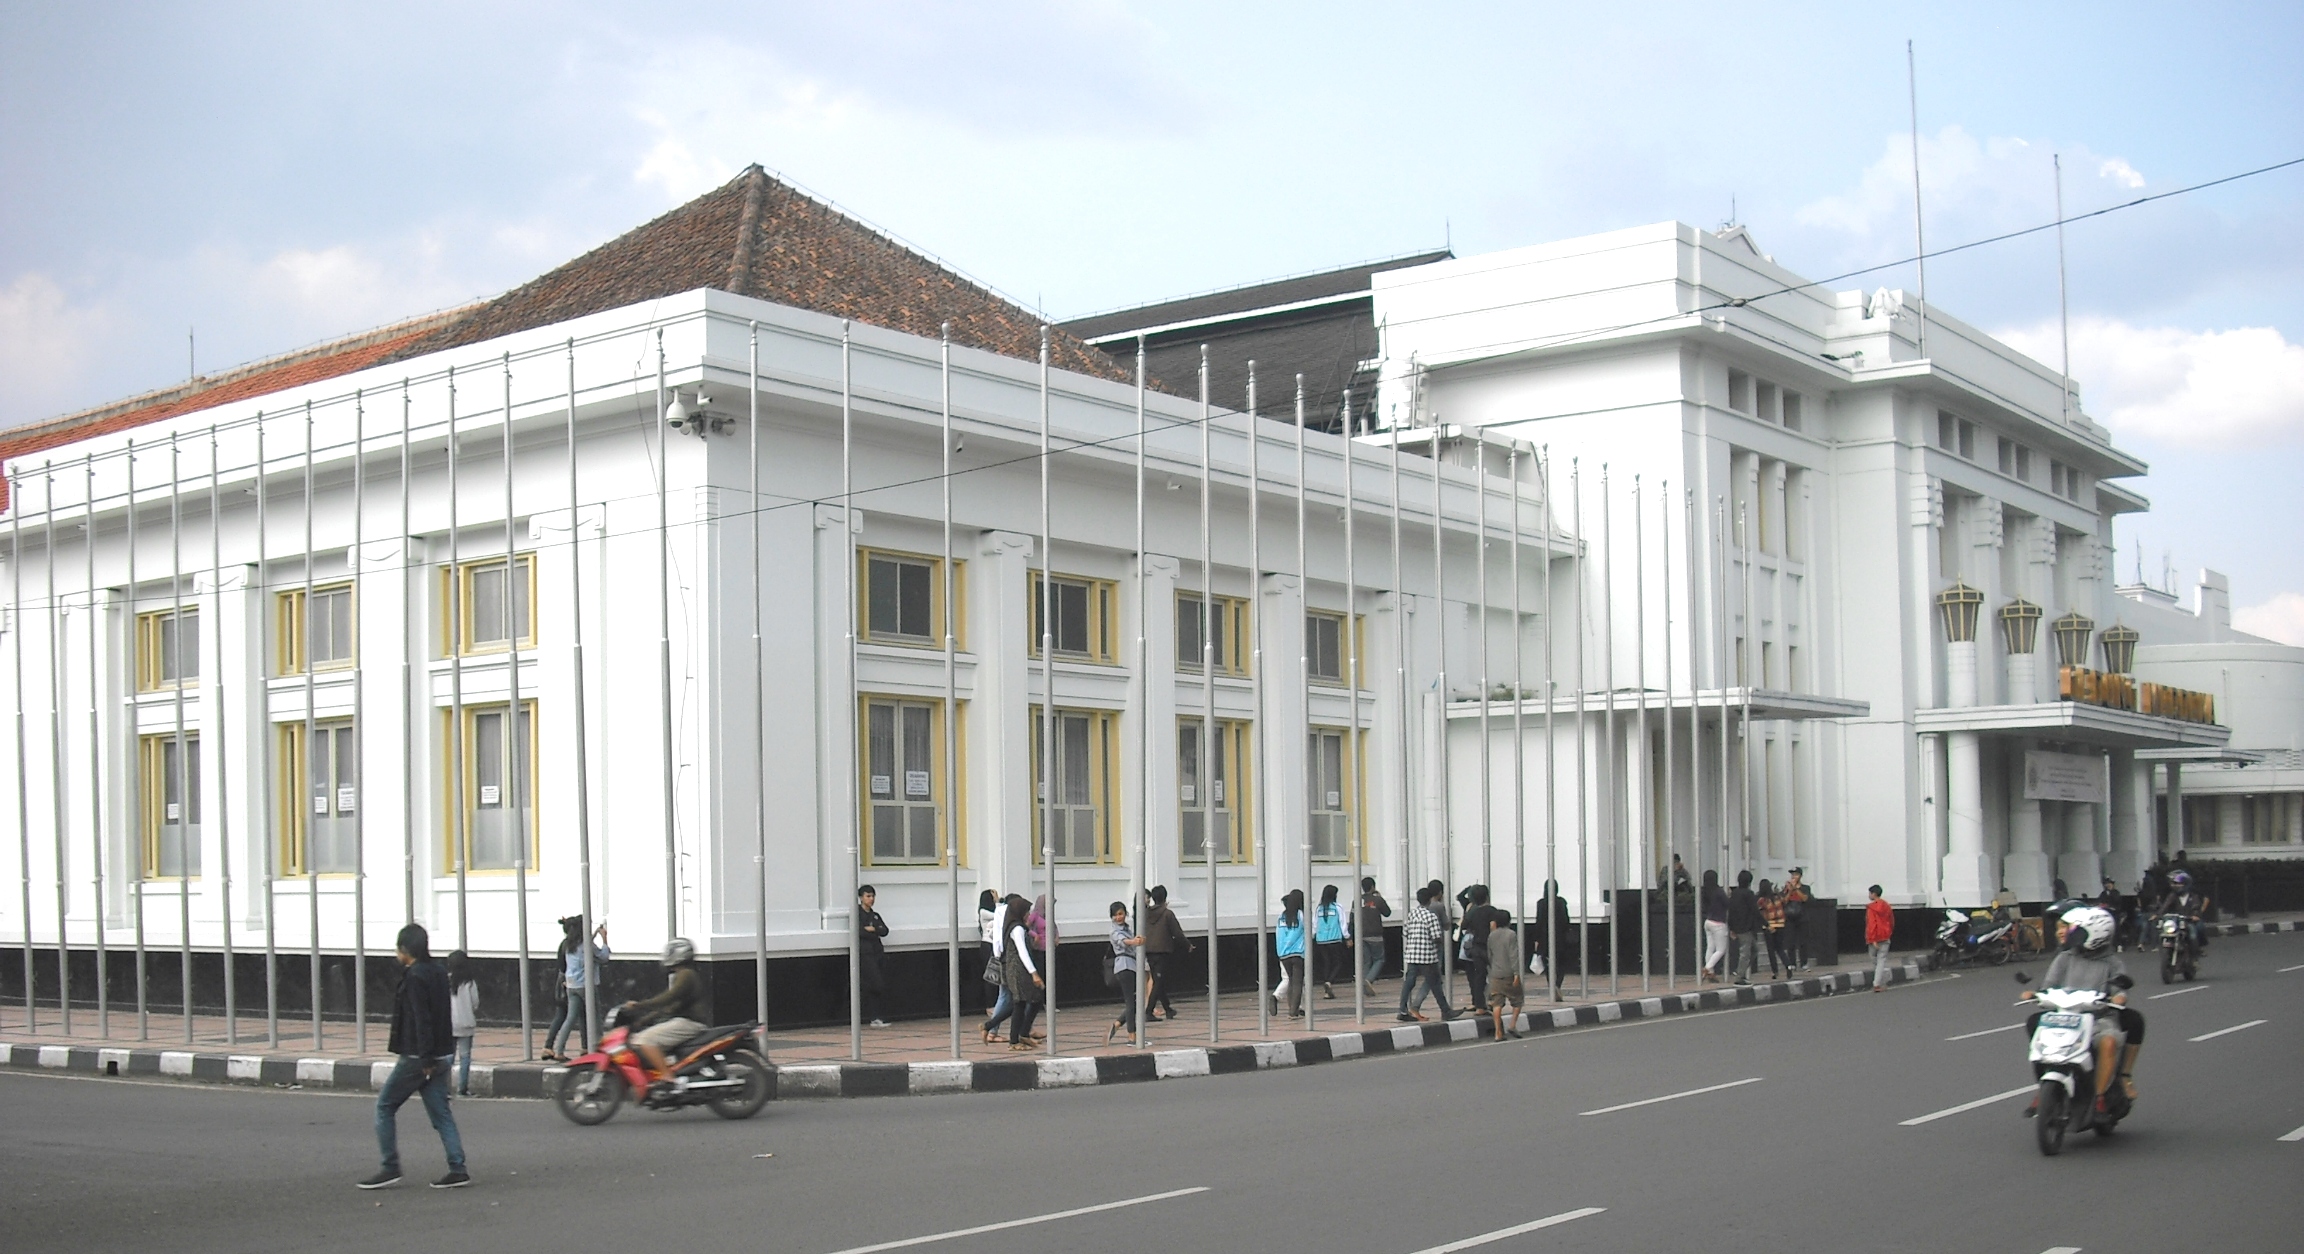 Gambar Gedung Merdeka Bandung Bali - 1001malam.com